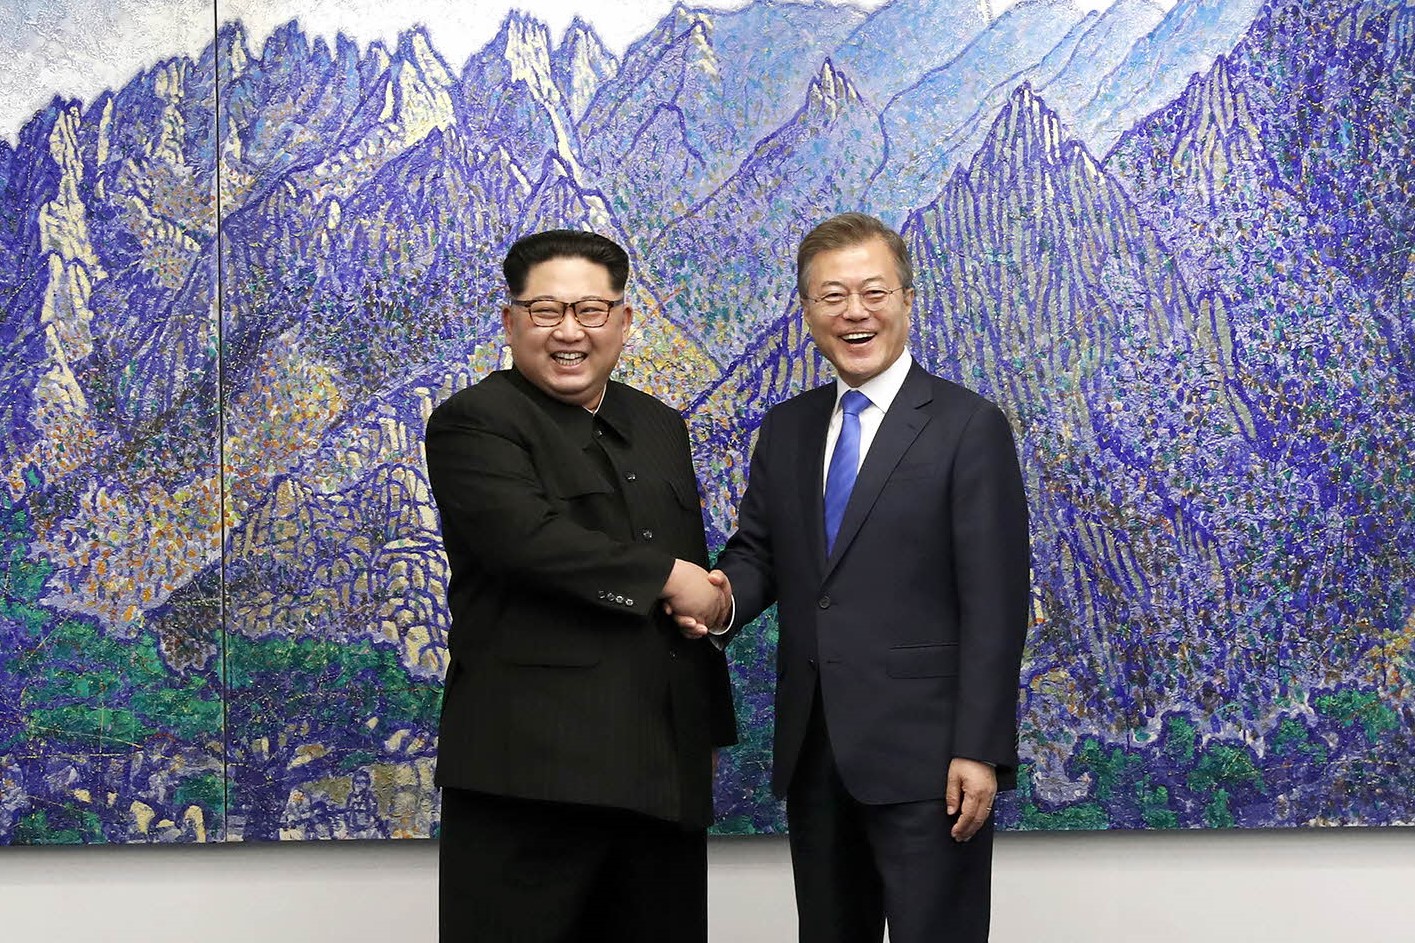 Kim and South Korean President Moon Jae-in shake hands during the 2018 inter-Korean Summit, April 2018 | Cheongwadae / Blue House